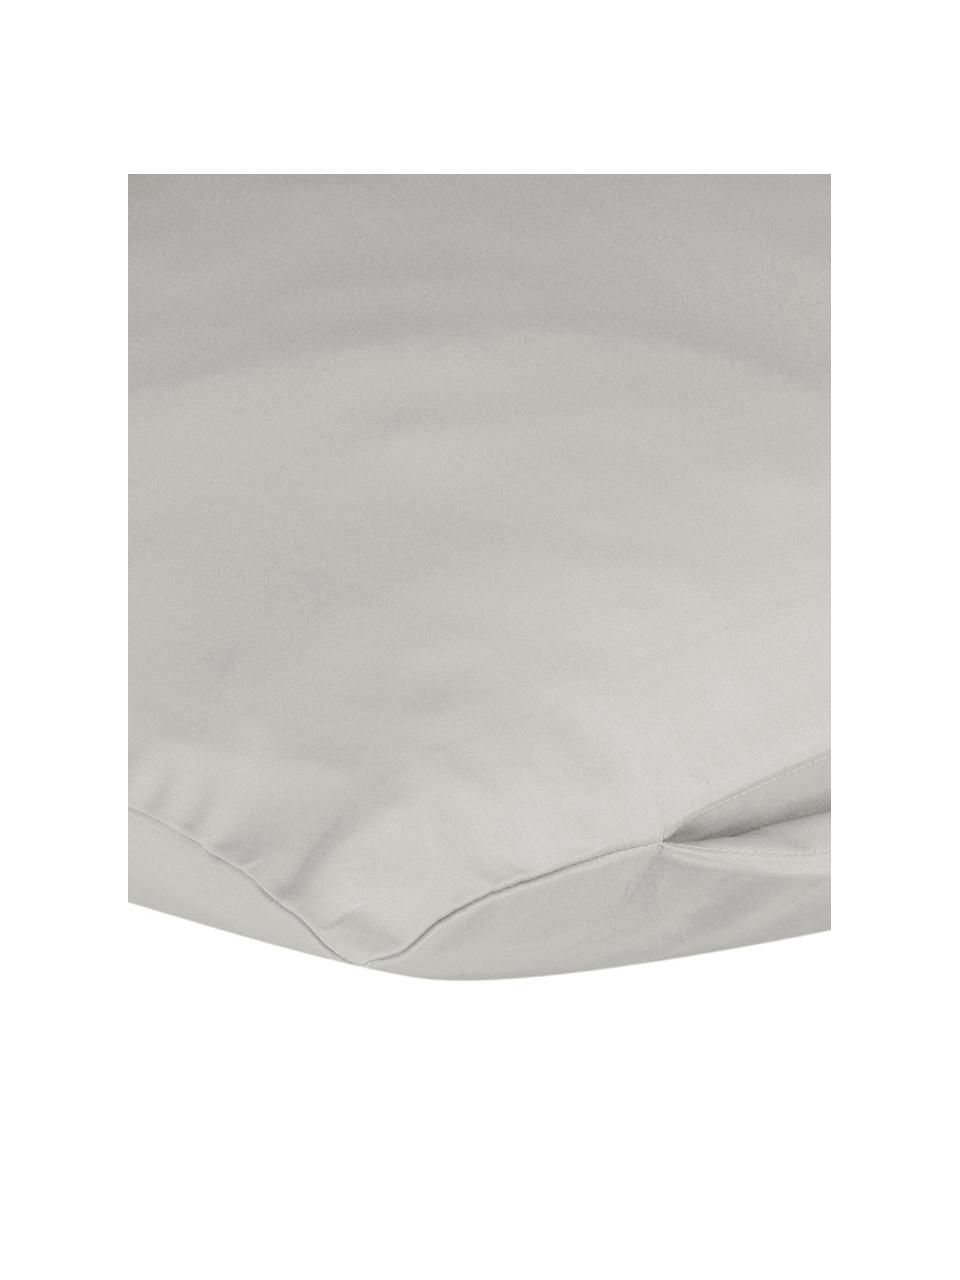 Baumwollsatin-Kissenbezug Comfort in Hellgrau, 65 x 100 cm, Webart: Satin, leicht glänzend Fa, Hellgrau, B 65 x L 100 cm